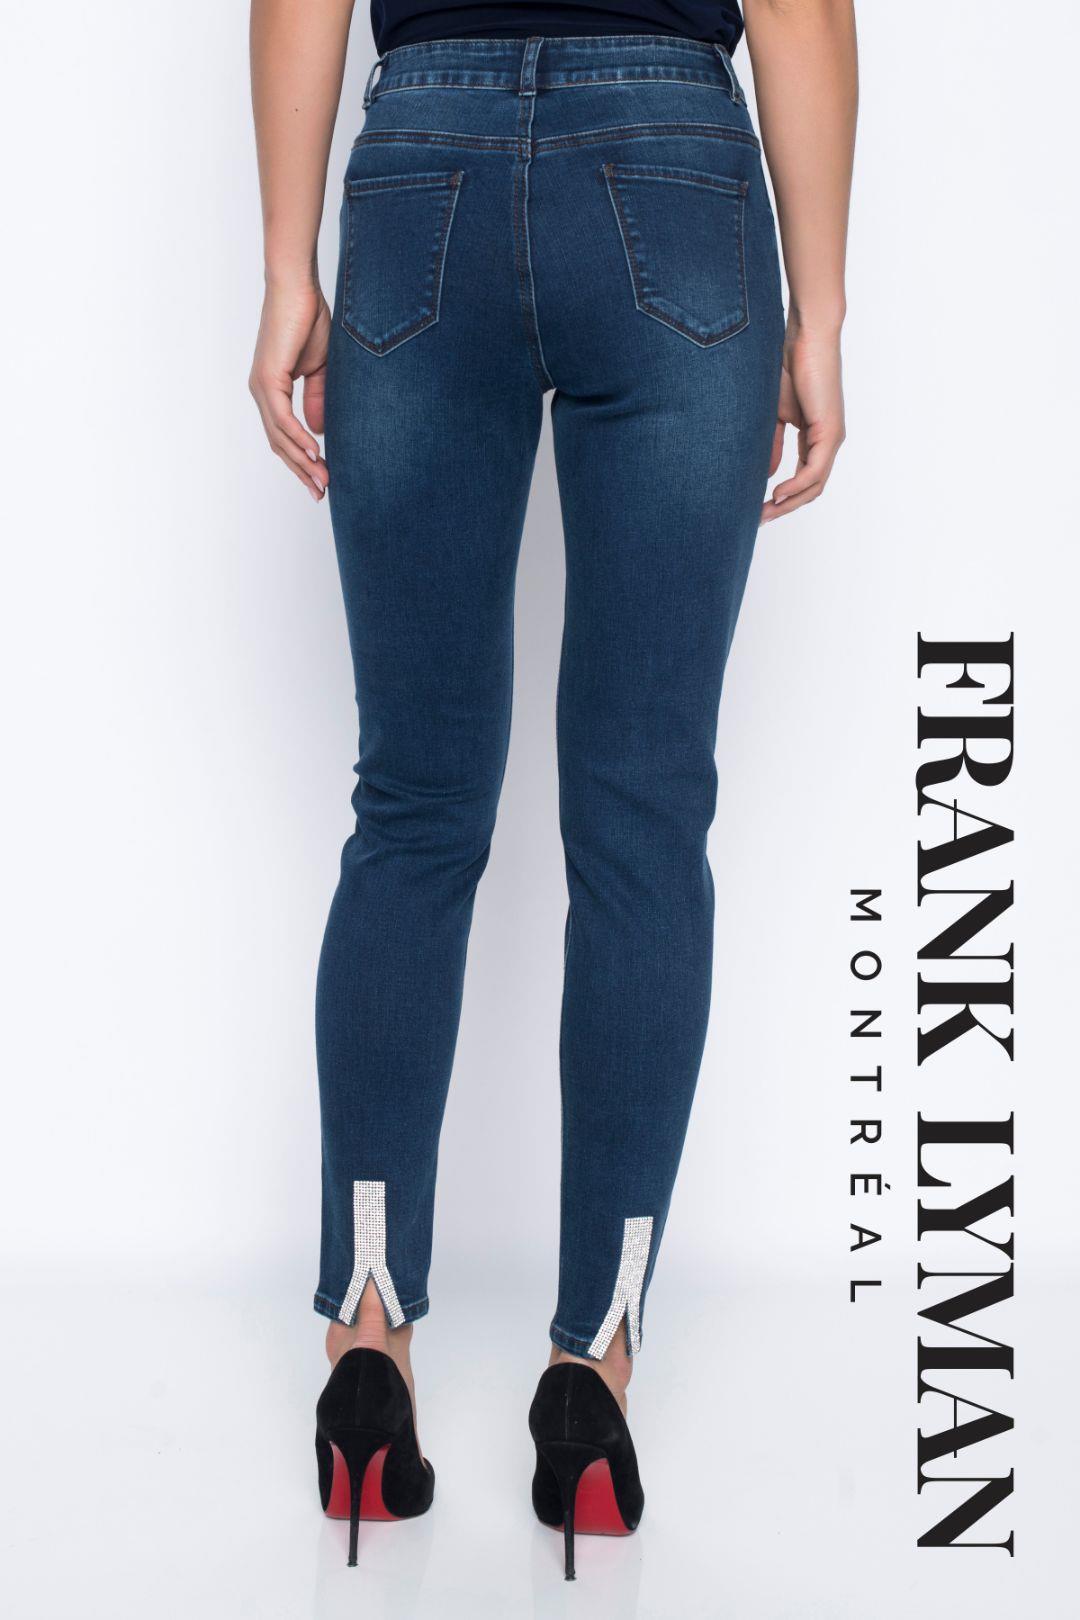 Frank Lyman - Jeans